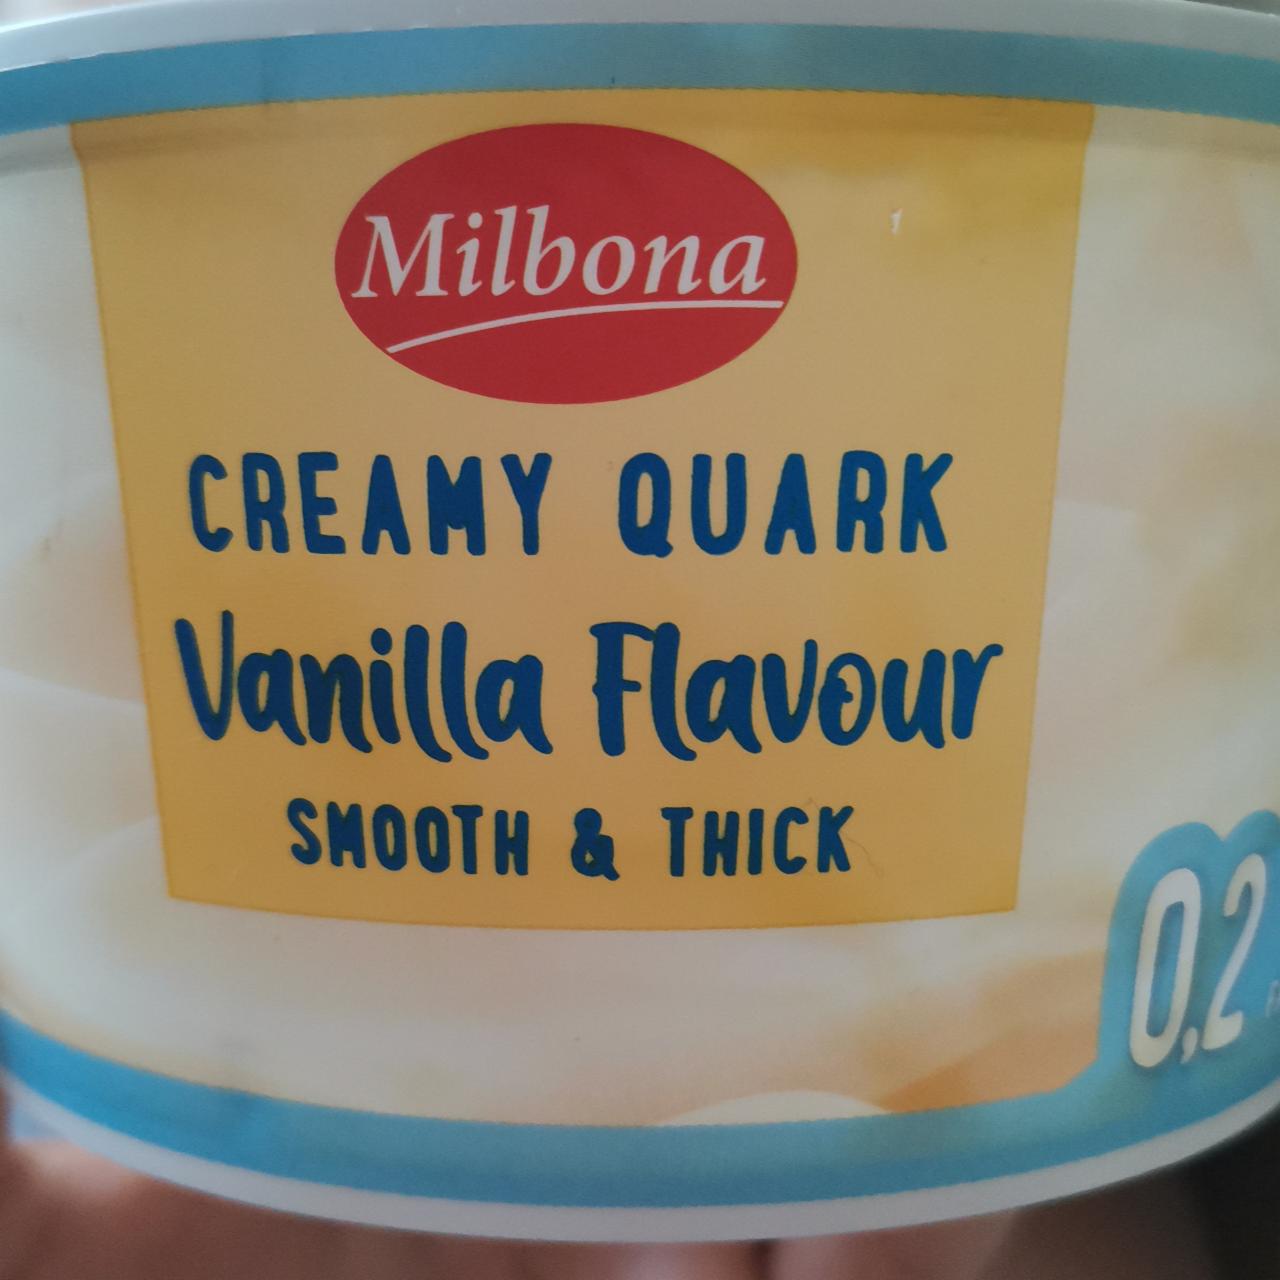 Képek - Creamy quark vanilla flavour smooth & thick Milbona